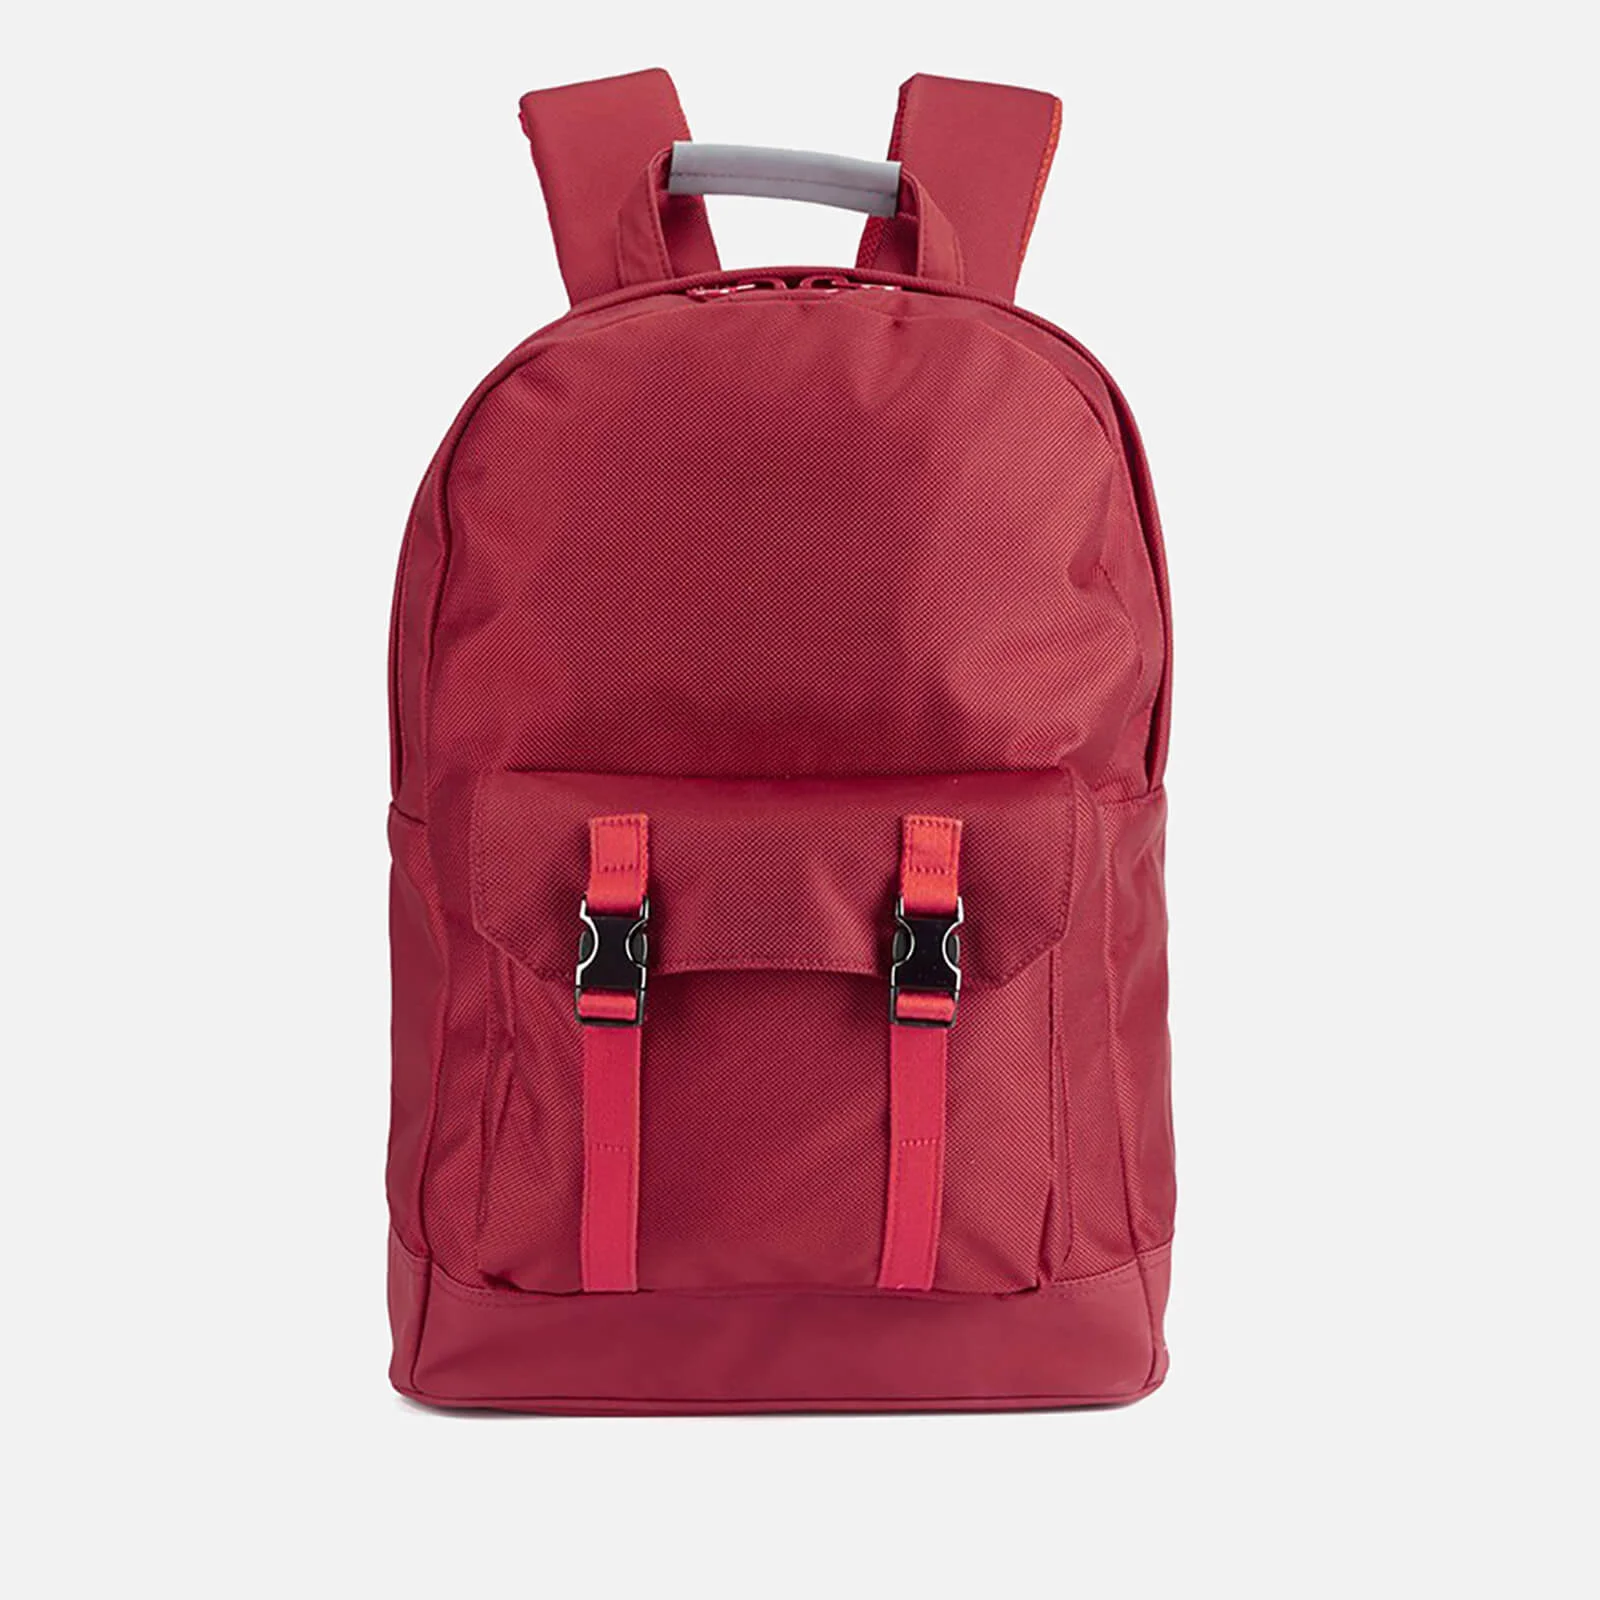 C6 Men's Pocket Backpack - Red Nylon Image 1